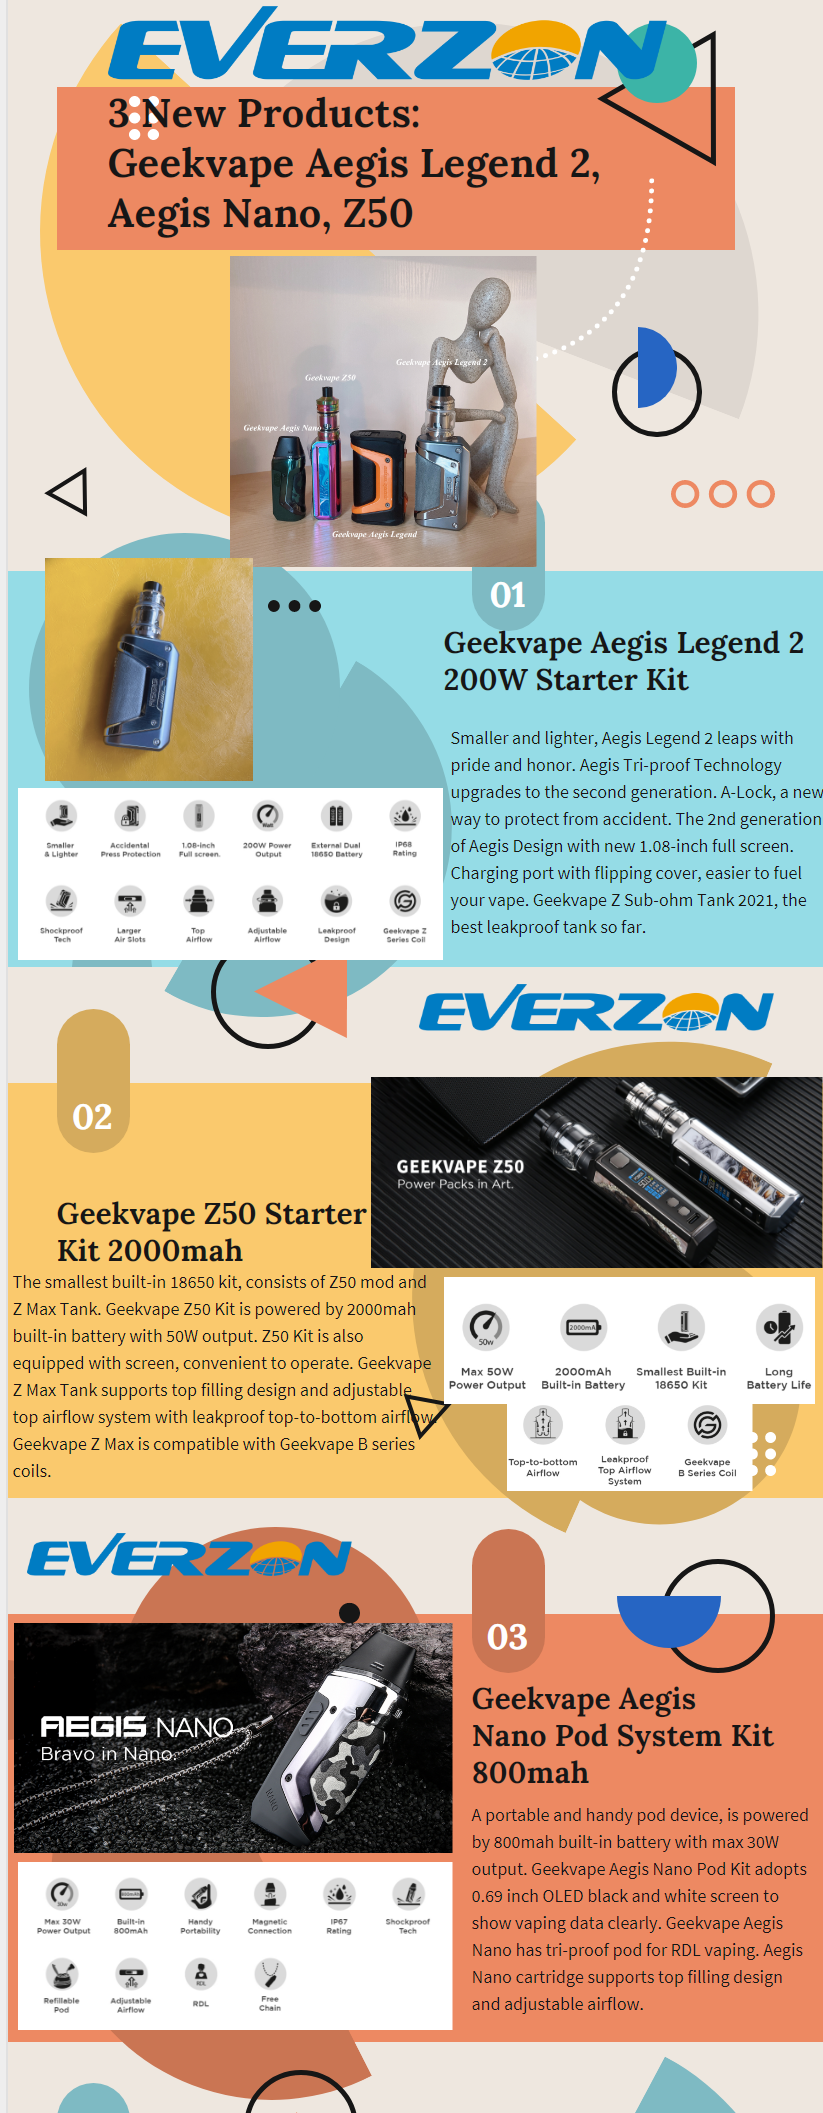 Everzon--3_new_products_geekvape_aegis_legend_2_aegis_nano_geekvape_z50.png